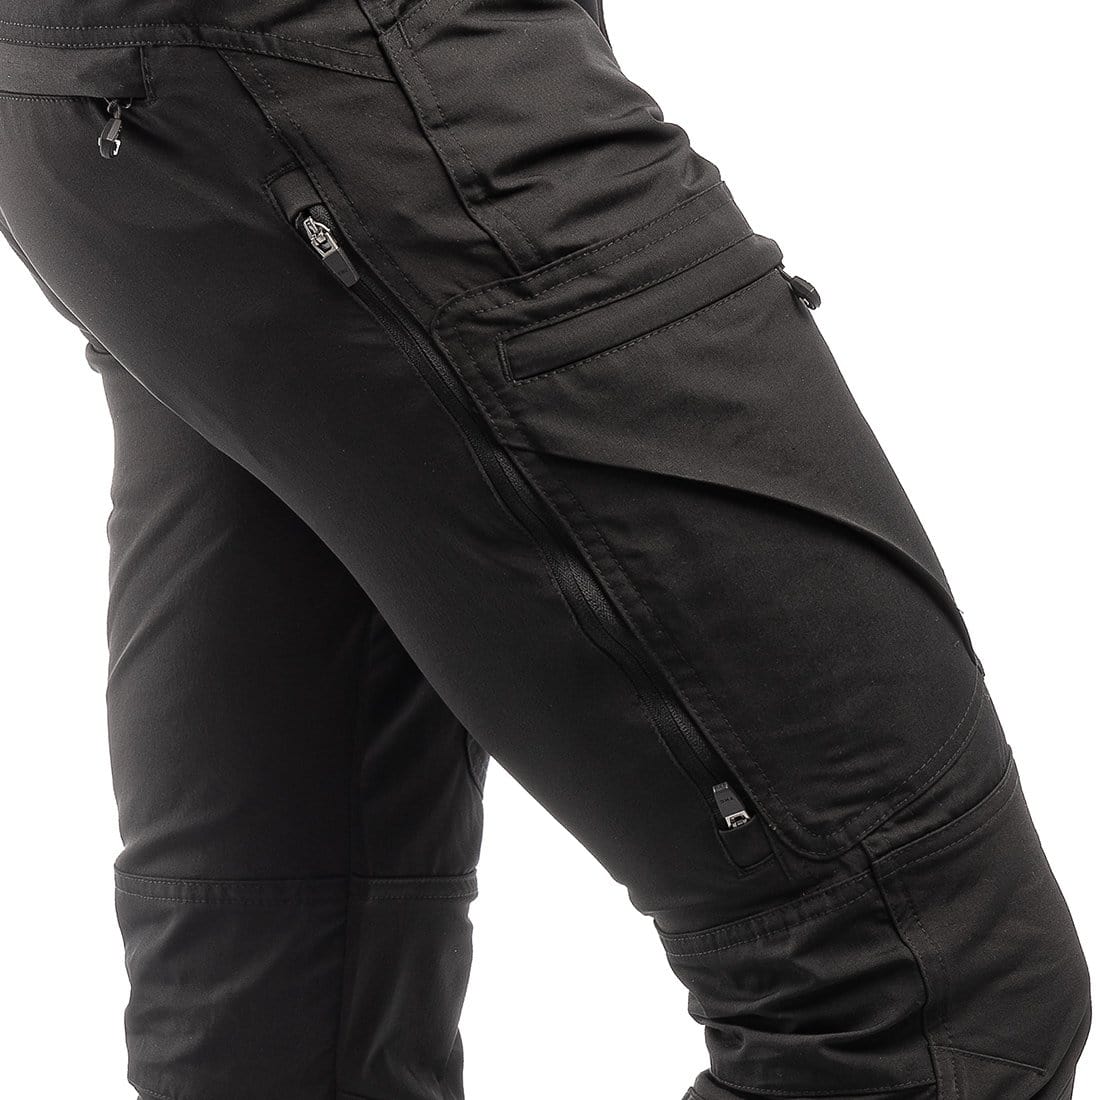 Mens Pants Men's Casual Versatile Fashion Stretch Pants Dot Print Slim Fit  Small Feet Suit Trousers Gray - Walmart.com